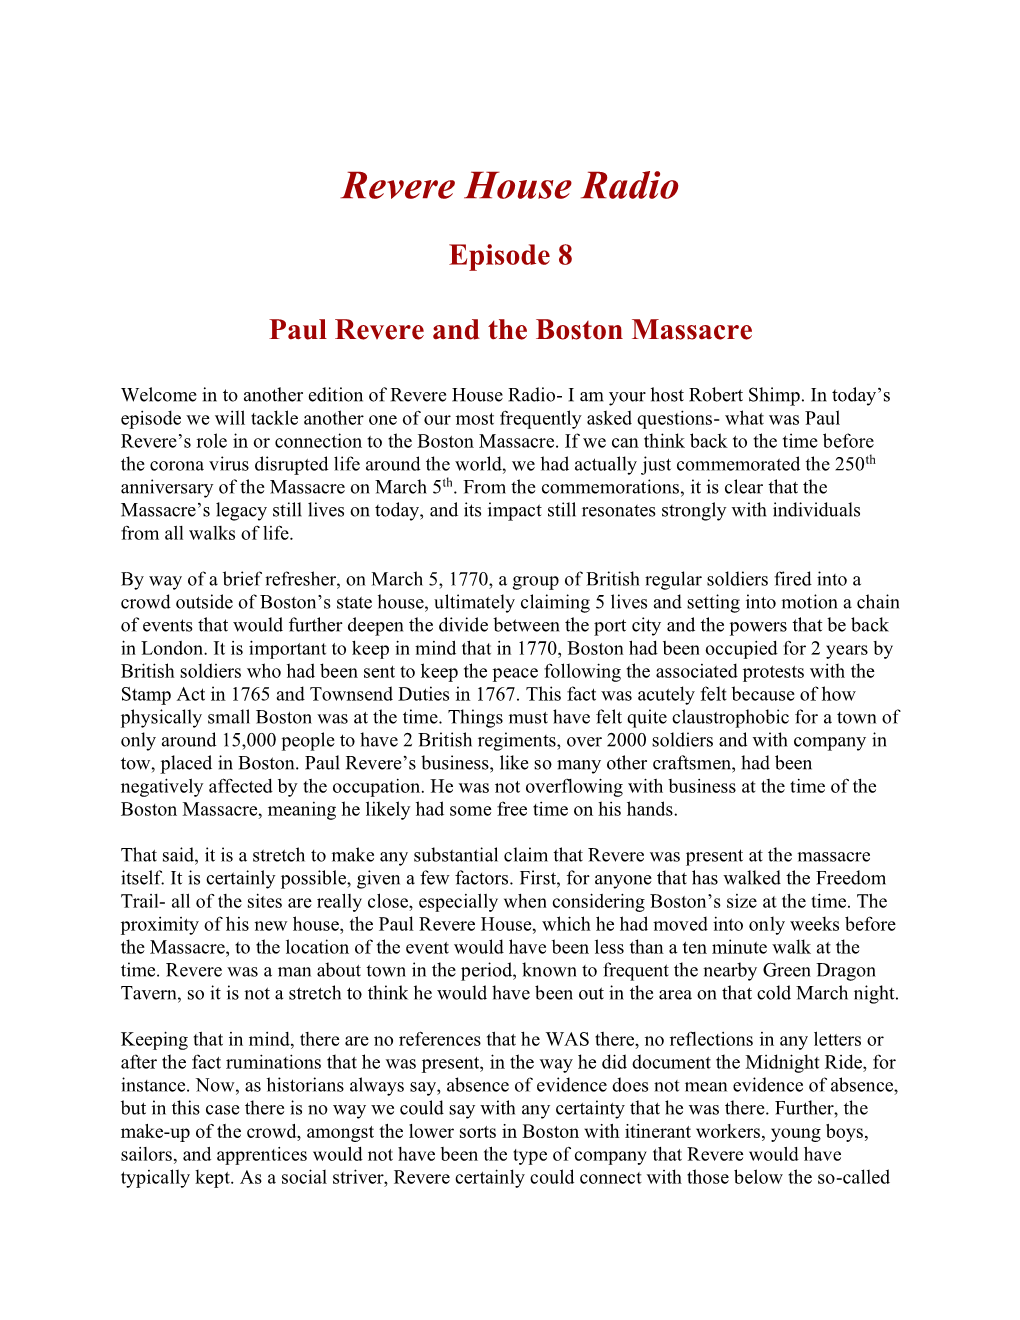 Paul Revere and the Boston Massacre